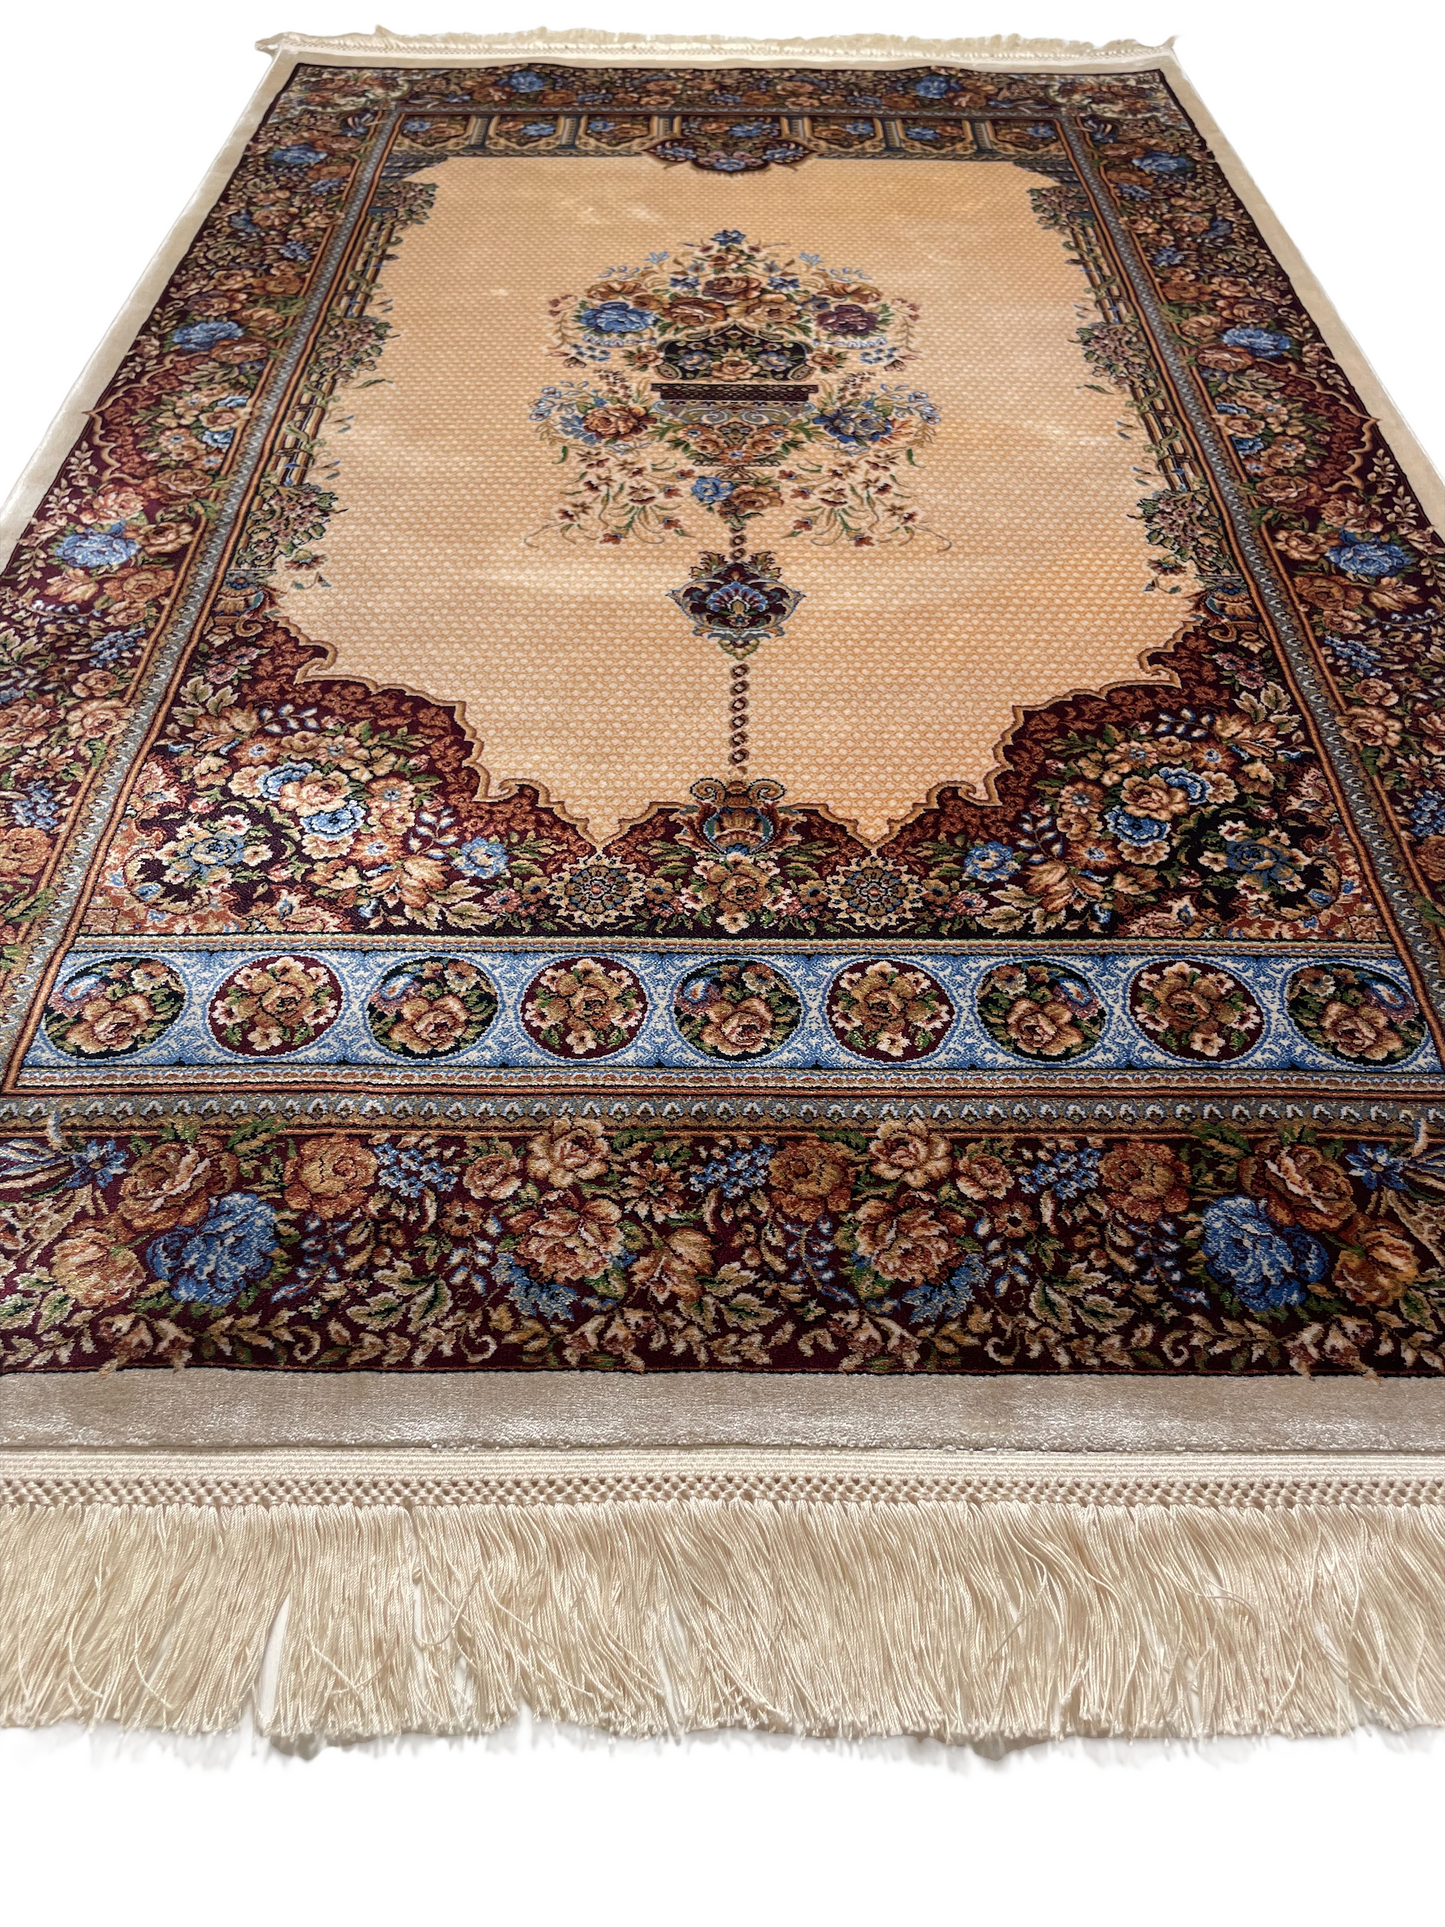 The Hudur rug displays the traditional Islamic "mihrab" design.